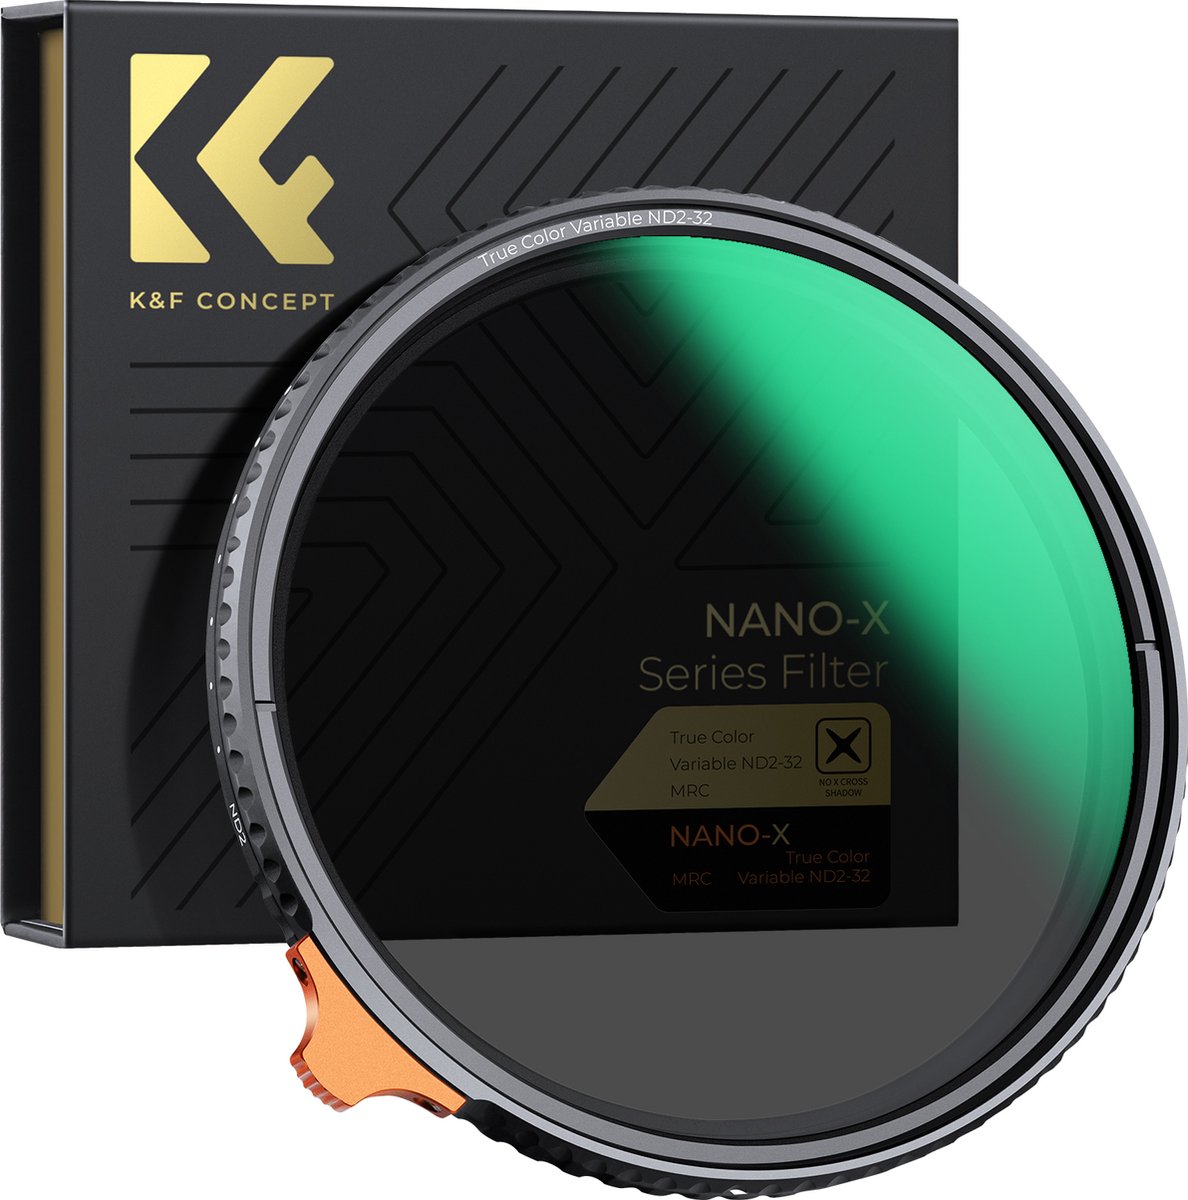 K&F Concept 67mm variabele ND2-32 Nano-X True color MRC grijsfilter ND filter - K&F Concept